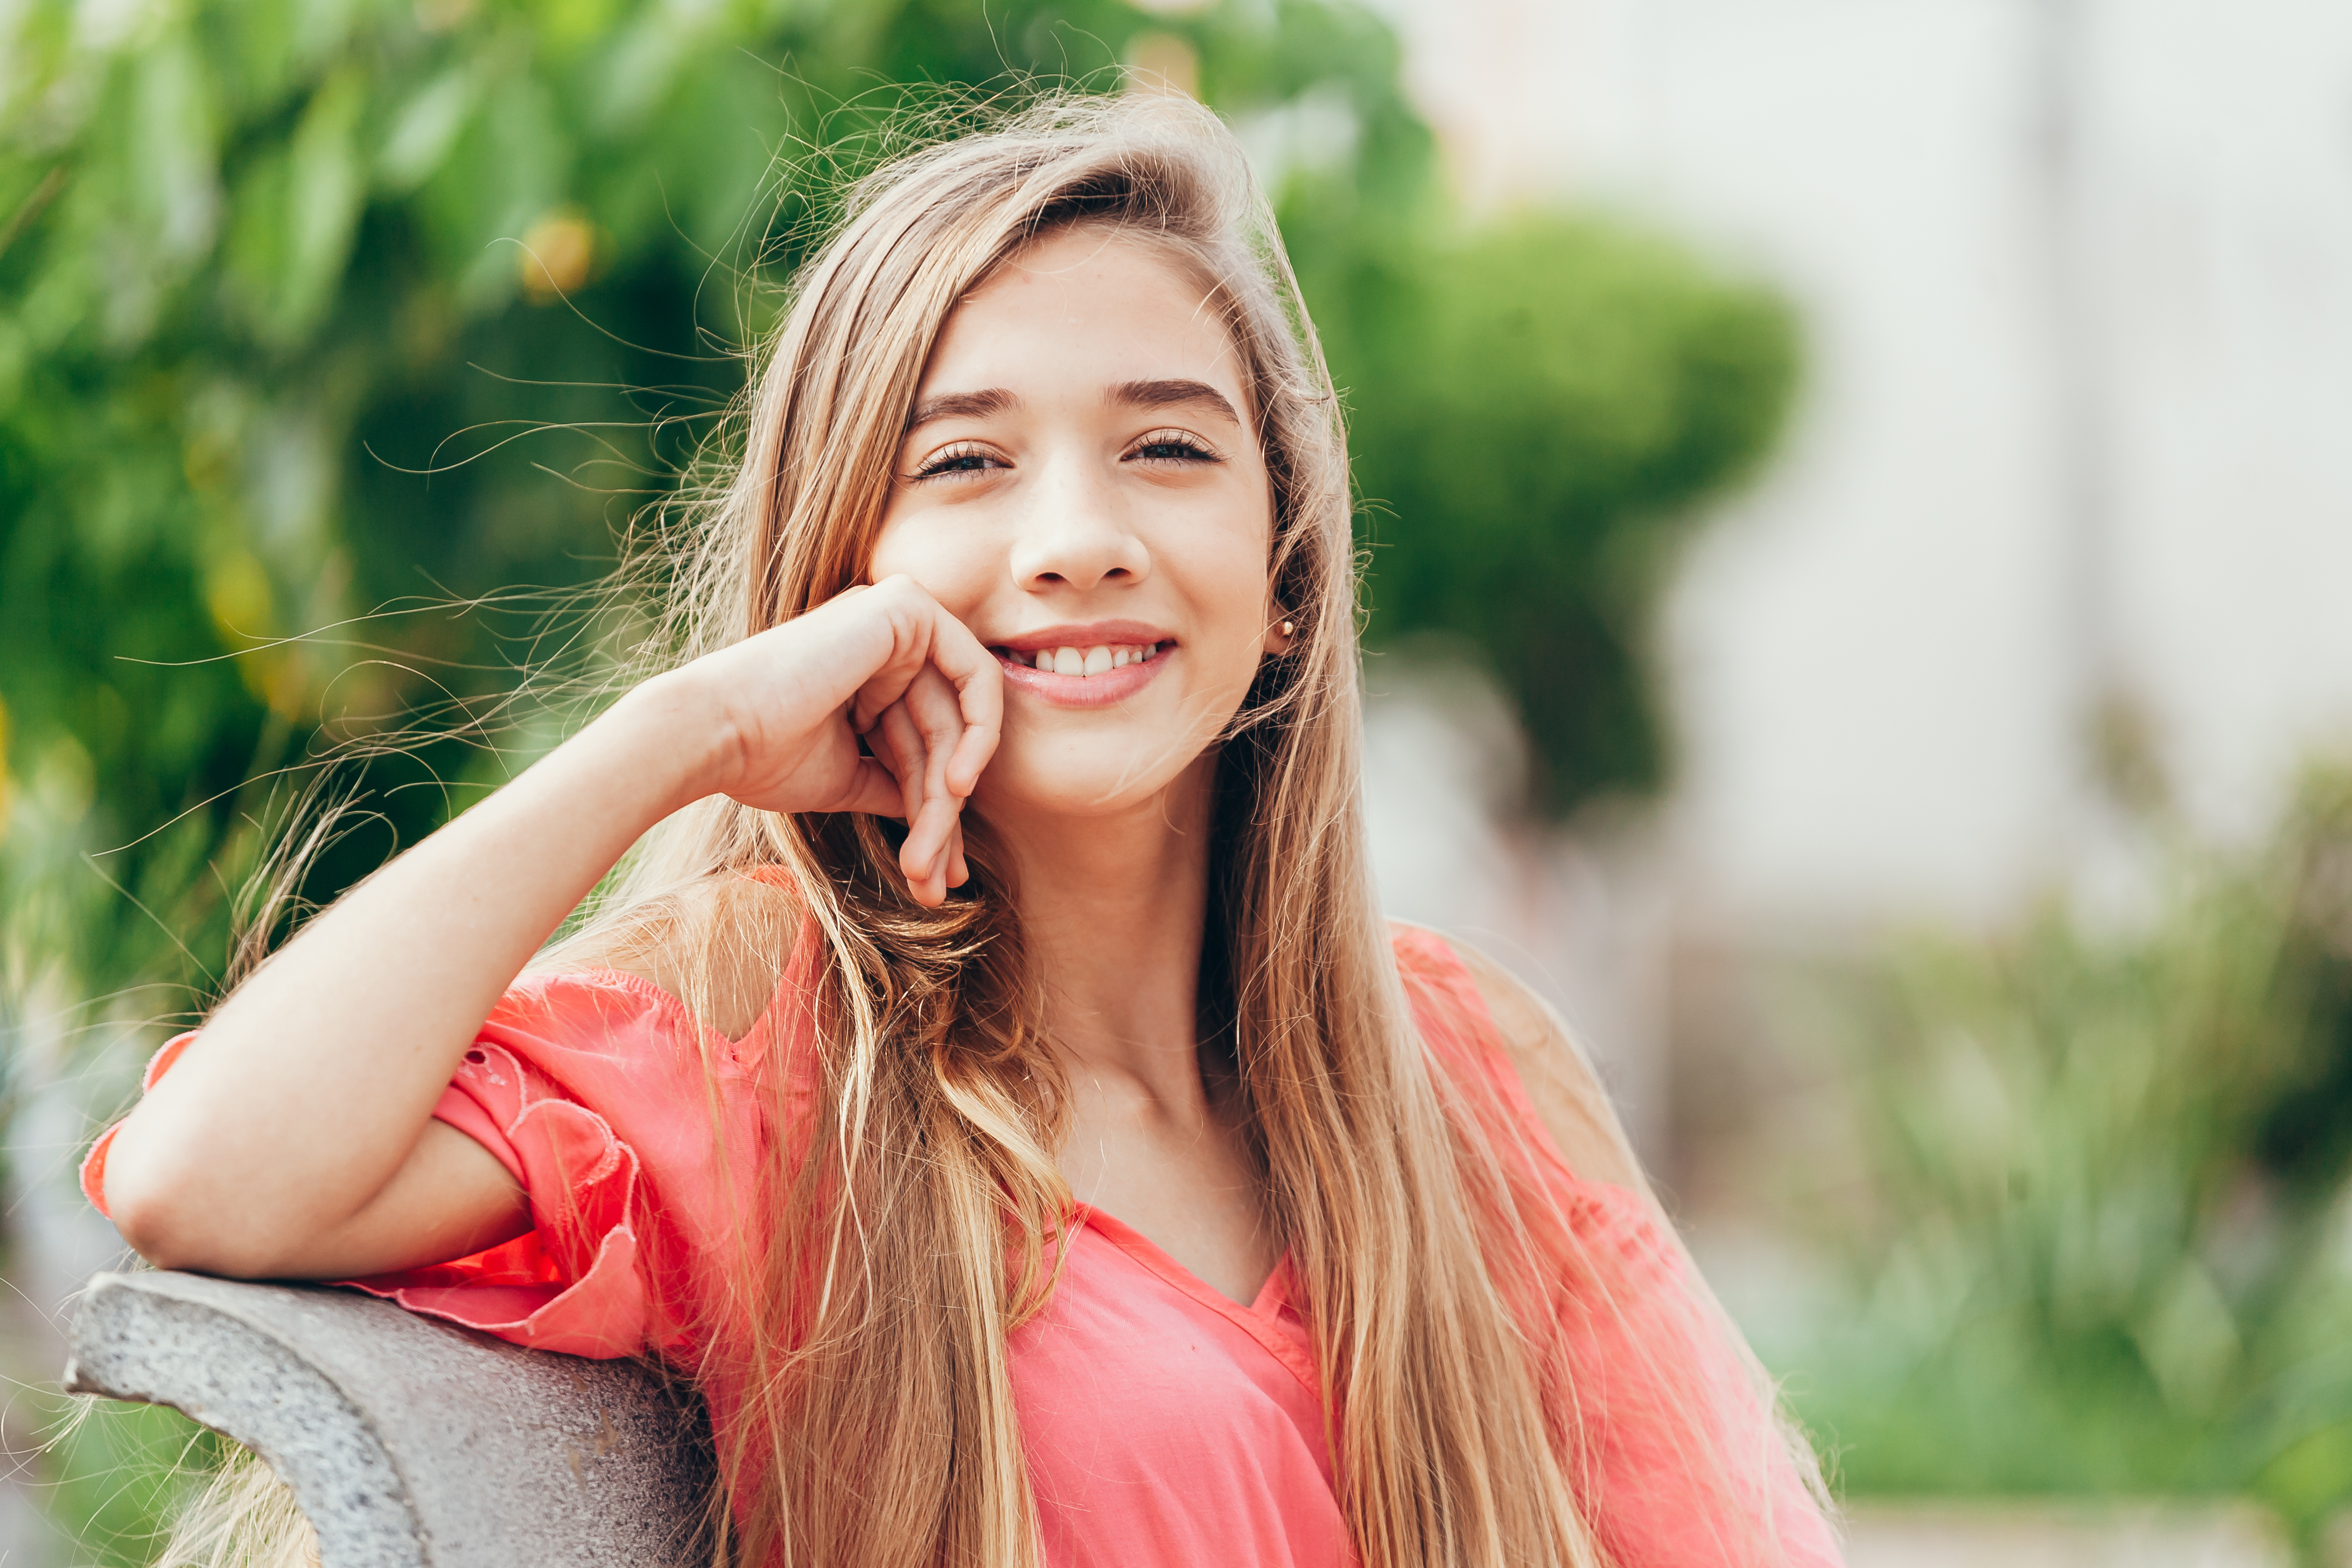 Une jeune fille souriant | Source : Shutterstock